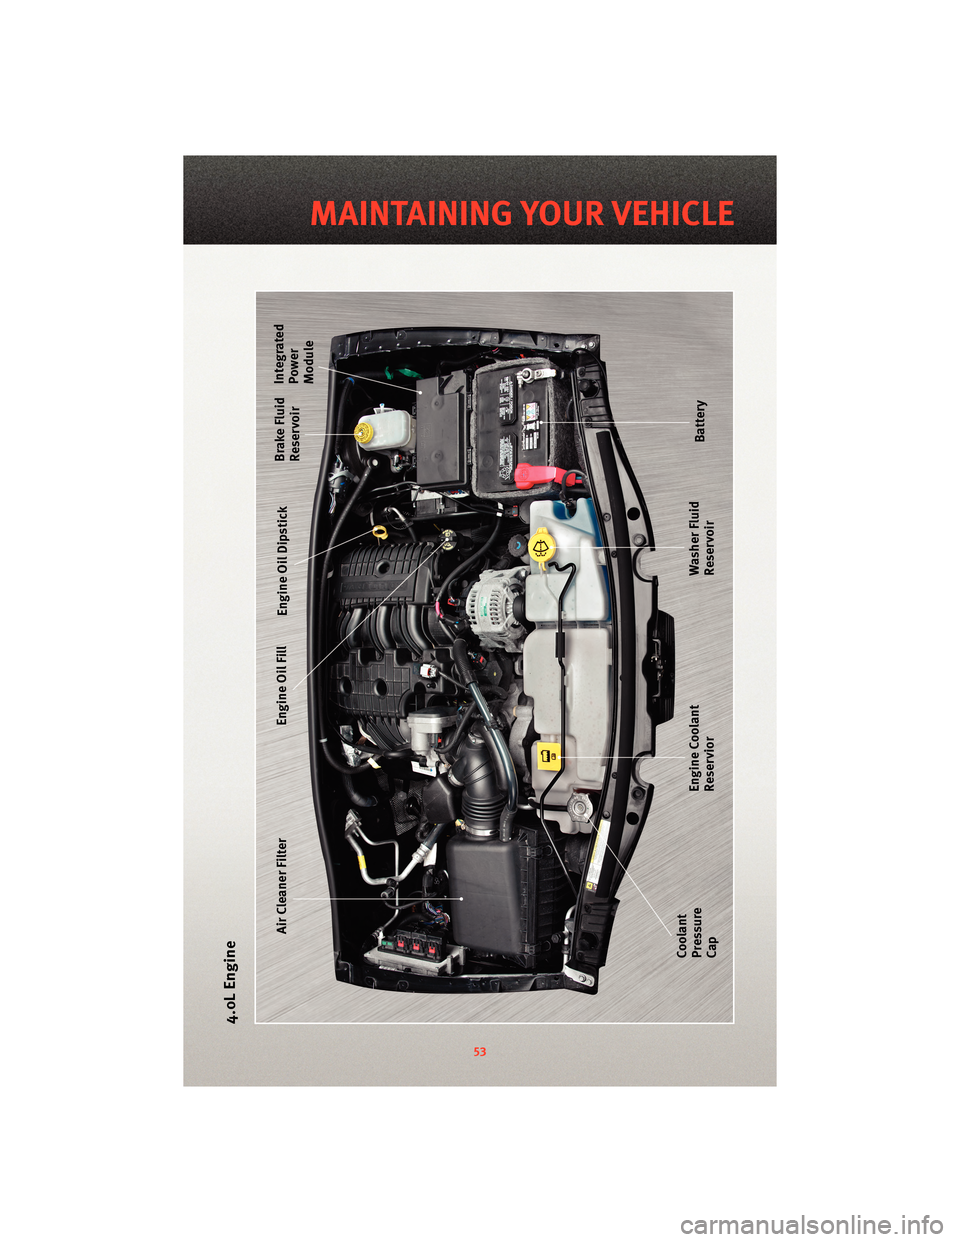 DODGE NITRO 2010 1.G Owners Manual 4.0L Engine
53
MAINTAINING YOUR VEHICLE 